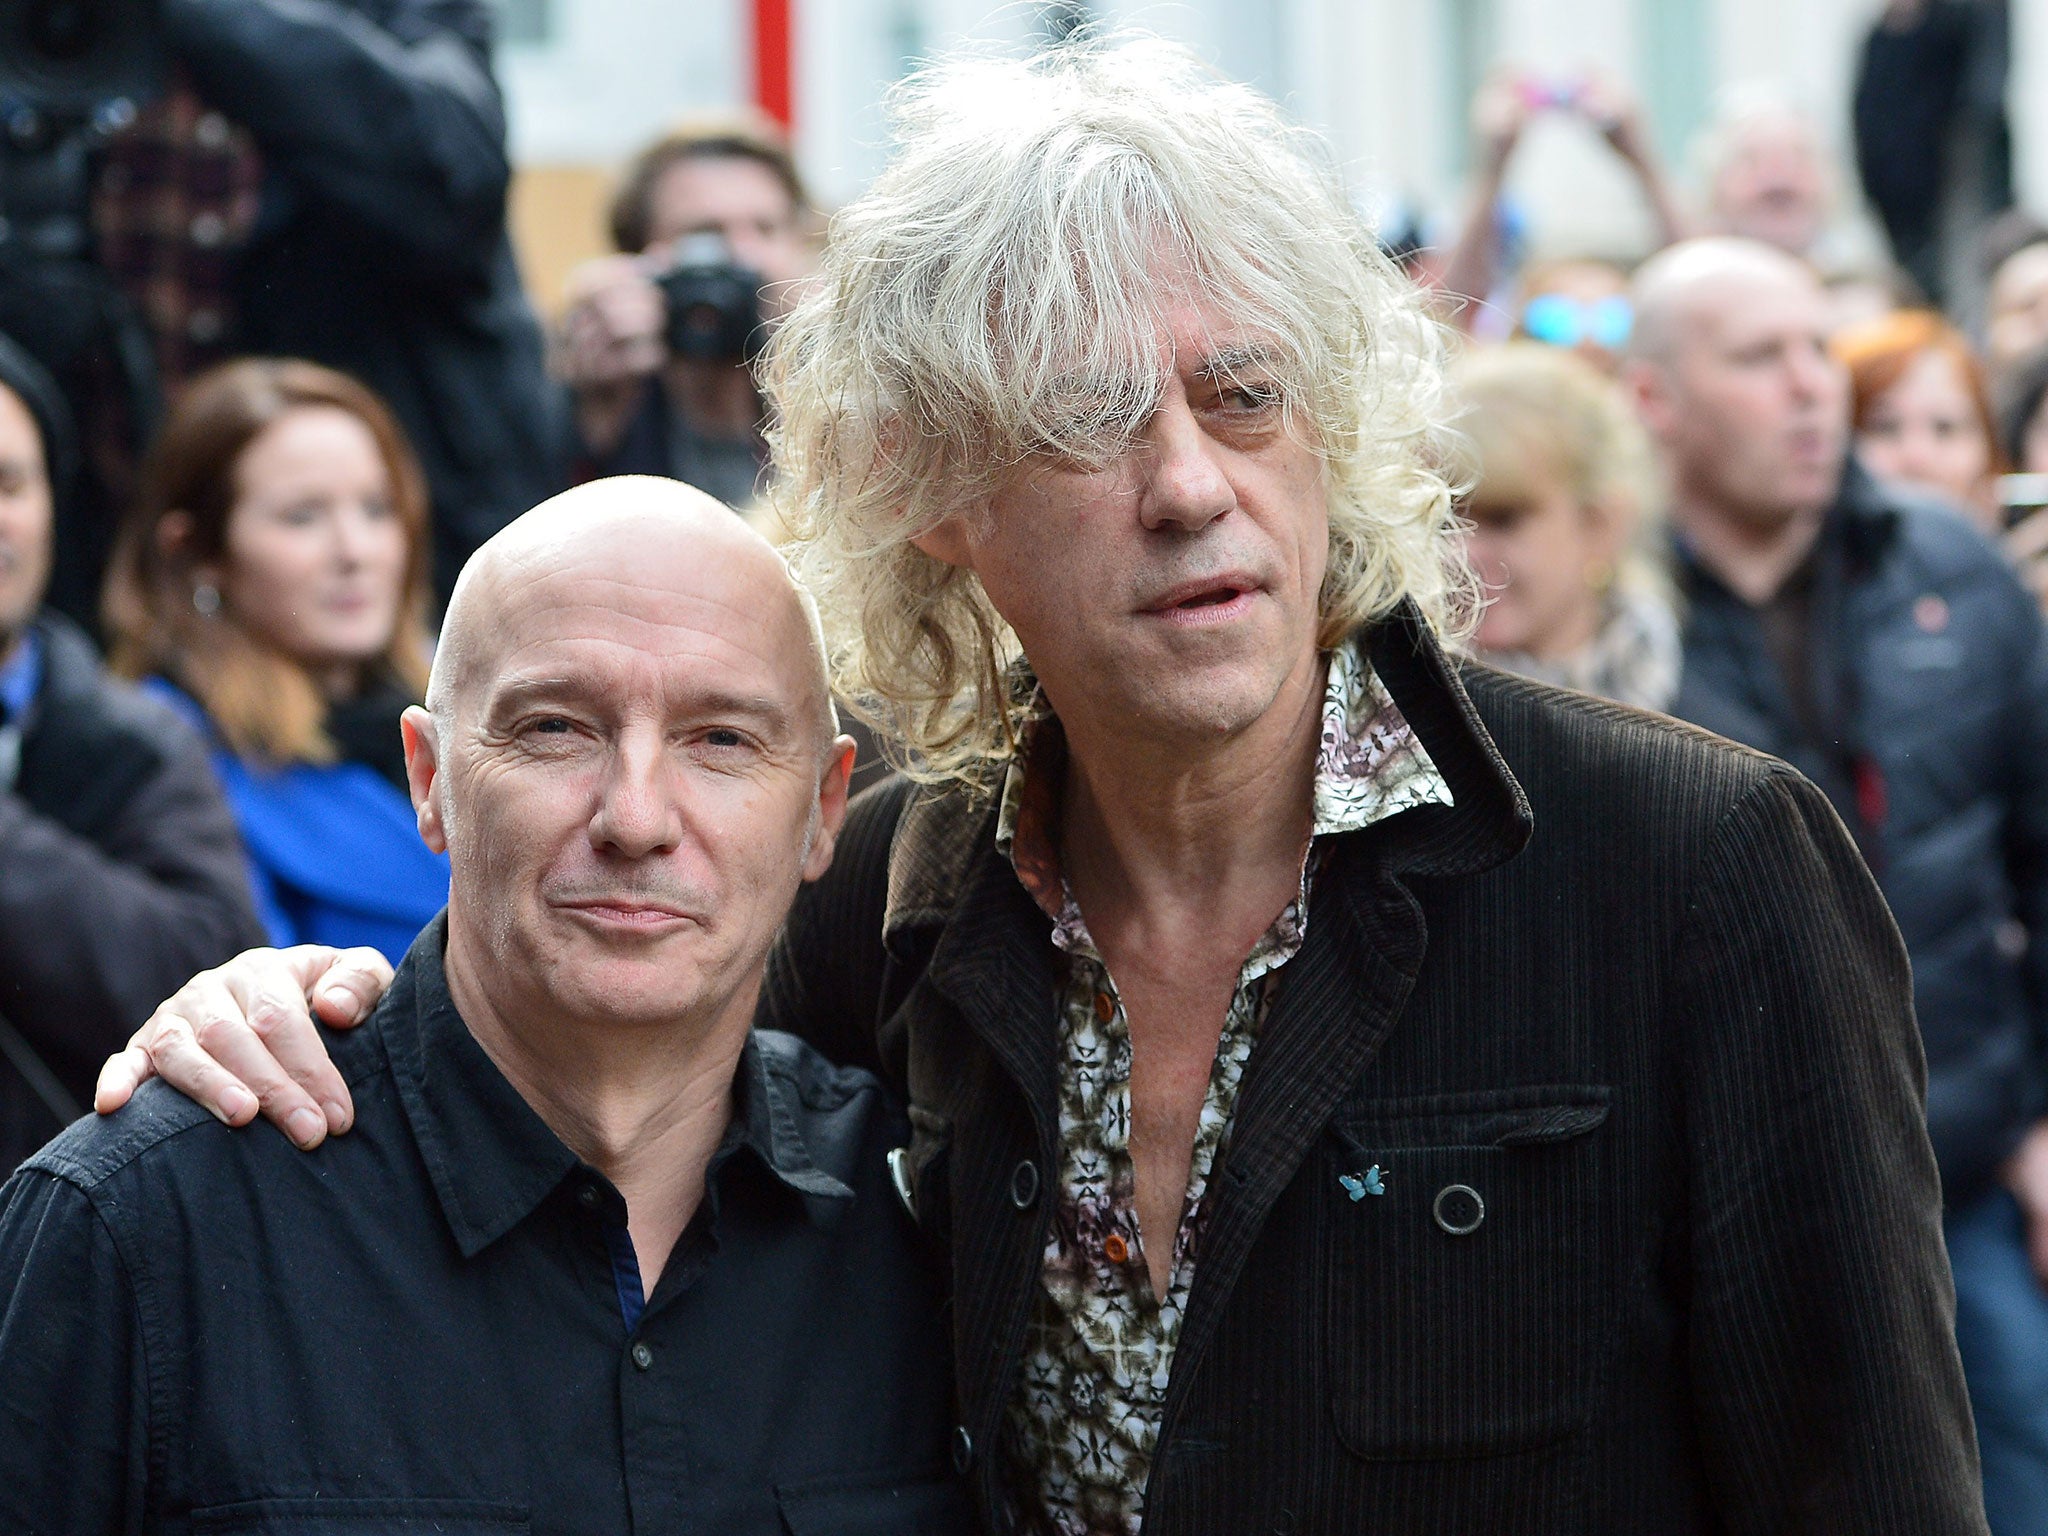 Band Aid organisers Midge Ure and Bob Geldof